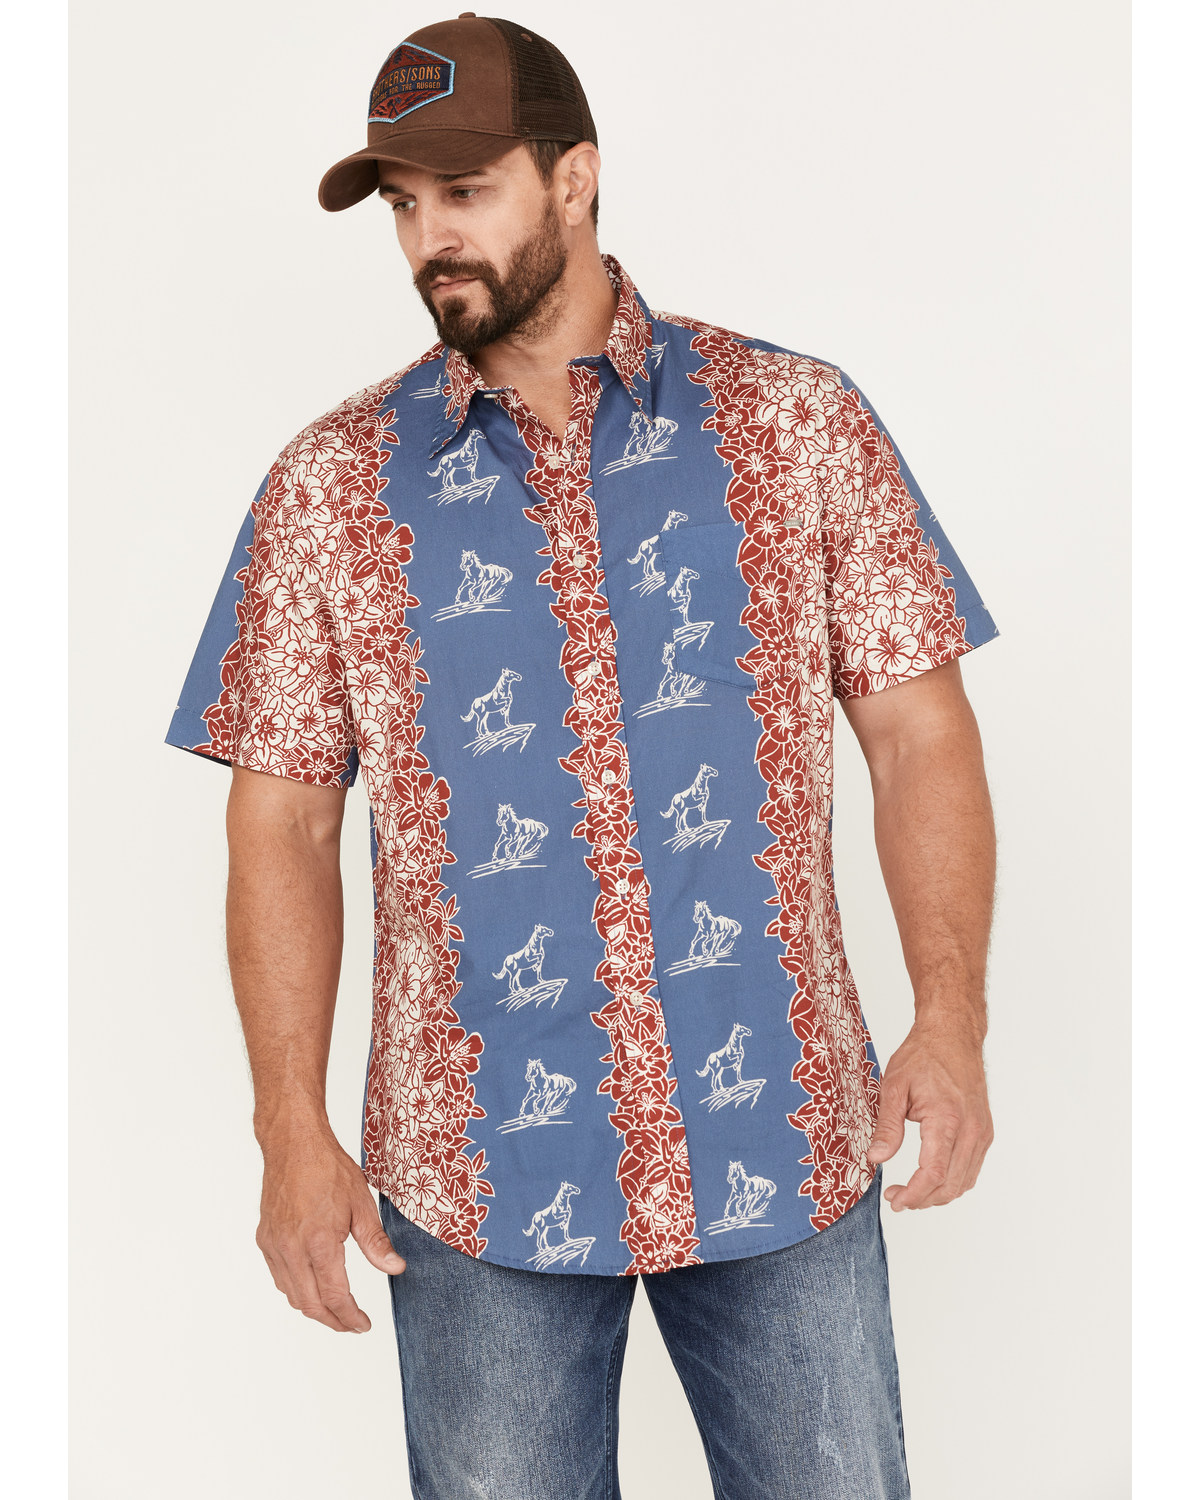 Tin Haul Men's Paniolo Tropical Horse Print Short Sleeve Western Shirt